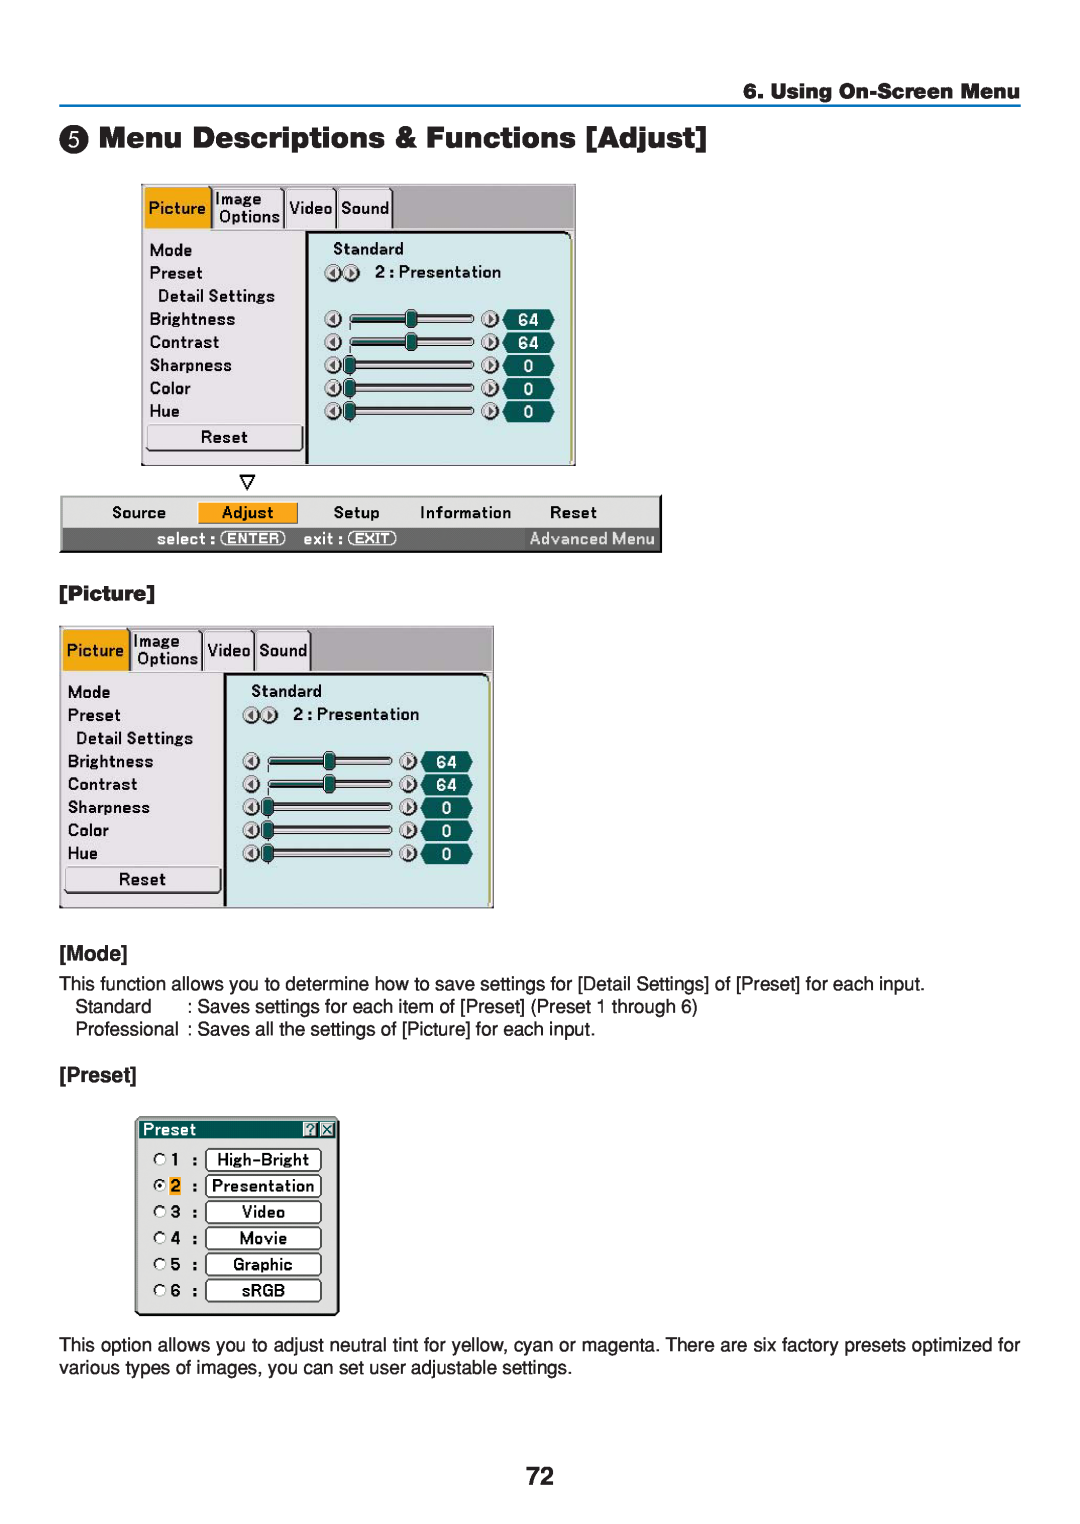 Dukane 8808 user manual Menu Descriptions & Functions Adjust, Picture, Mode, Preset, Using On-Screen Menu 